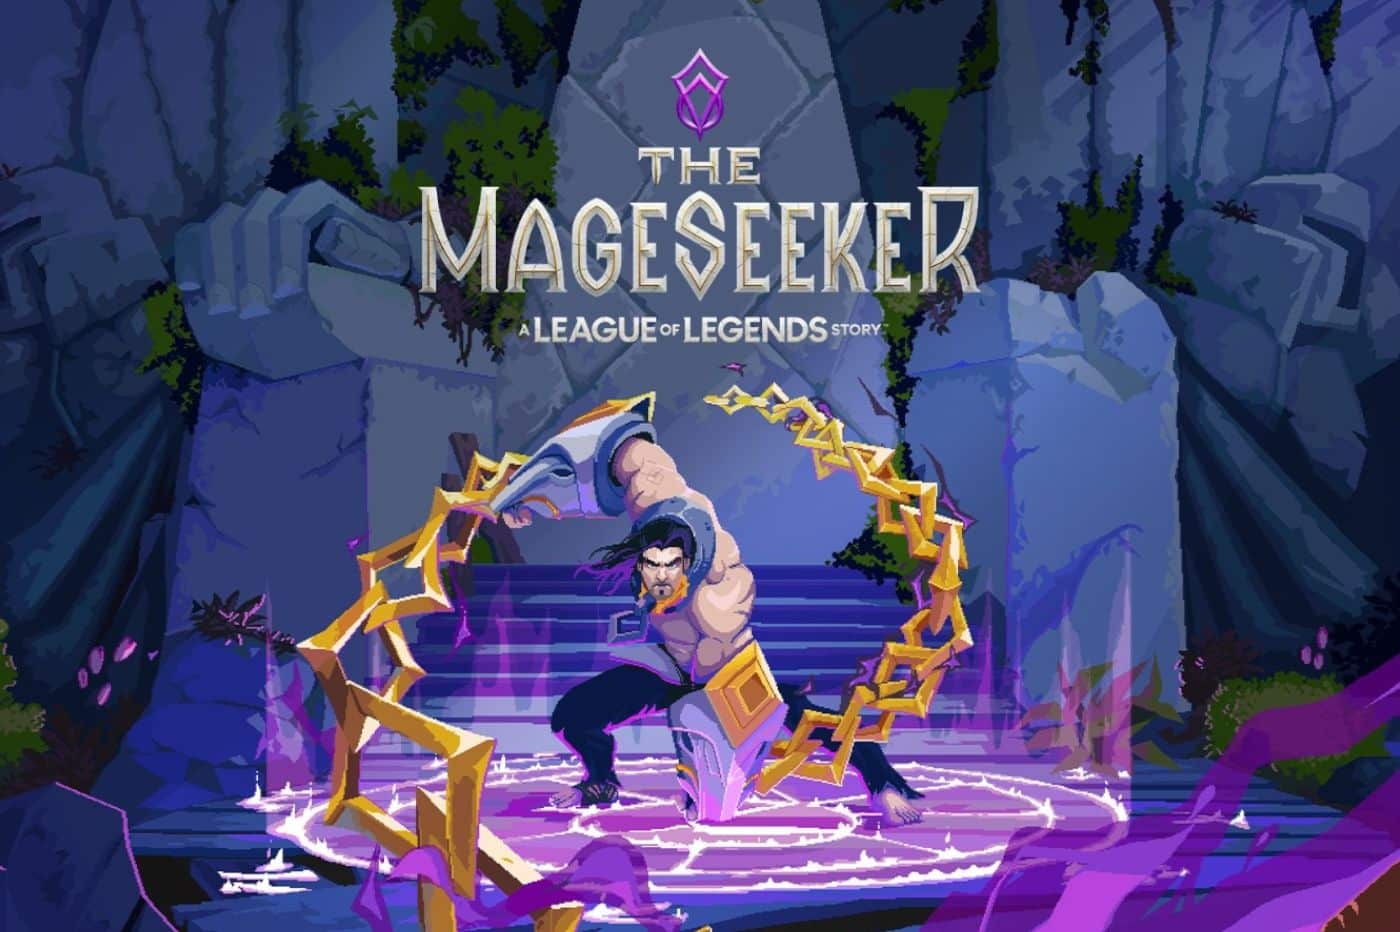 The Mageseeker League of Legends